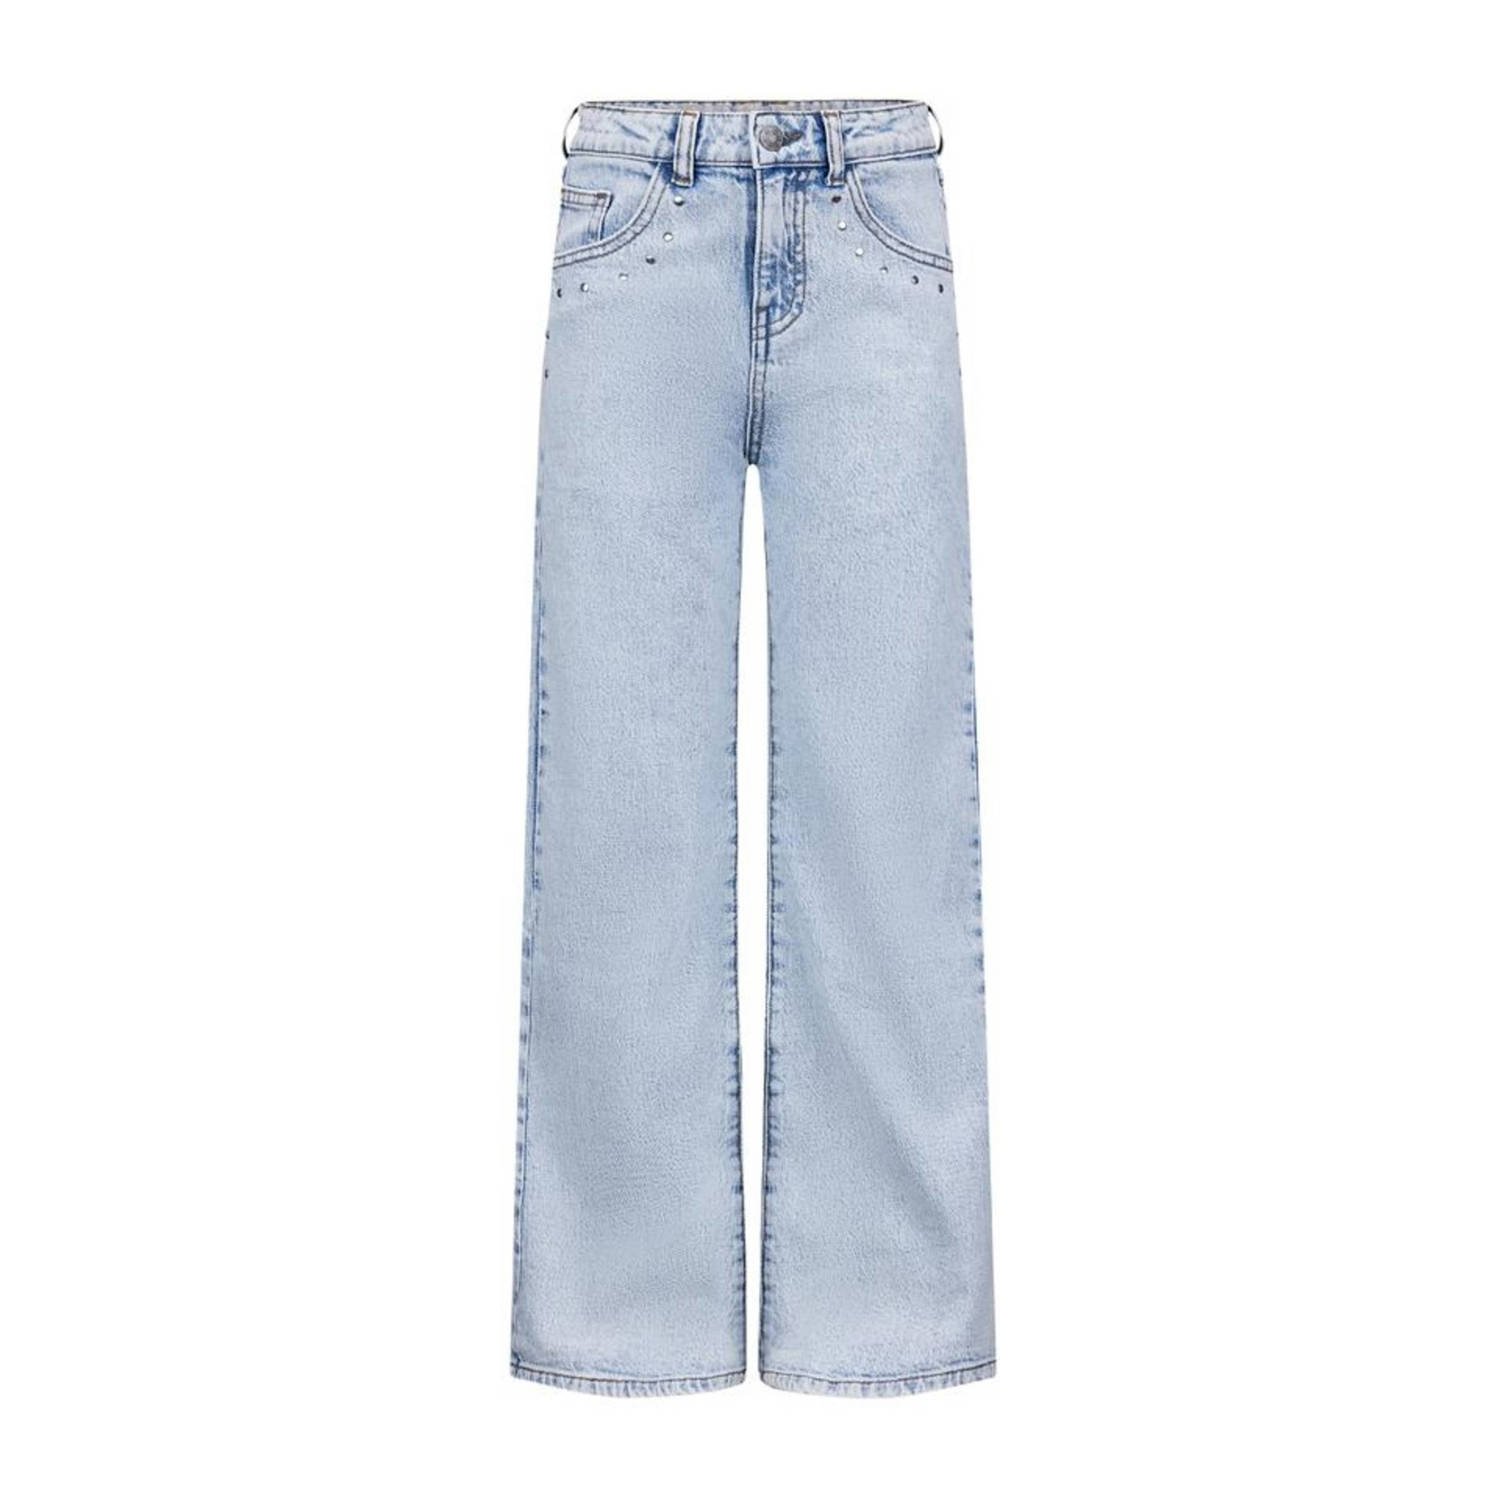 Retour Jeans high waist wide leg jeans Gigi bleached blue denim Blauw Meisjes Stretchdenim 140